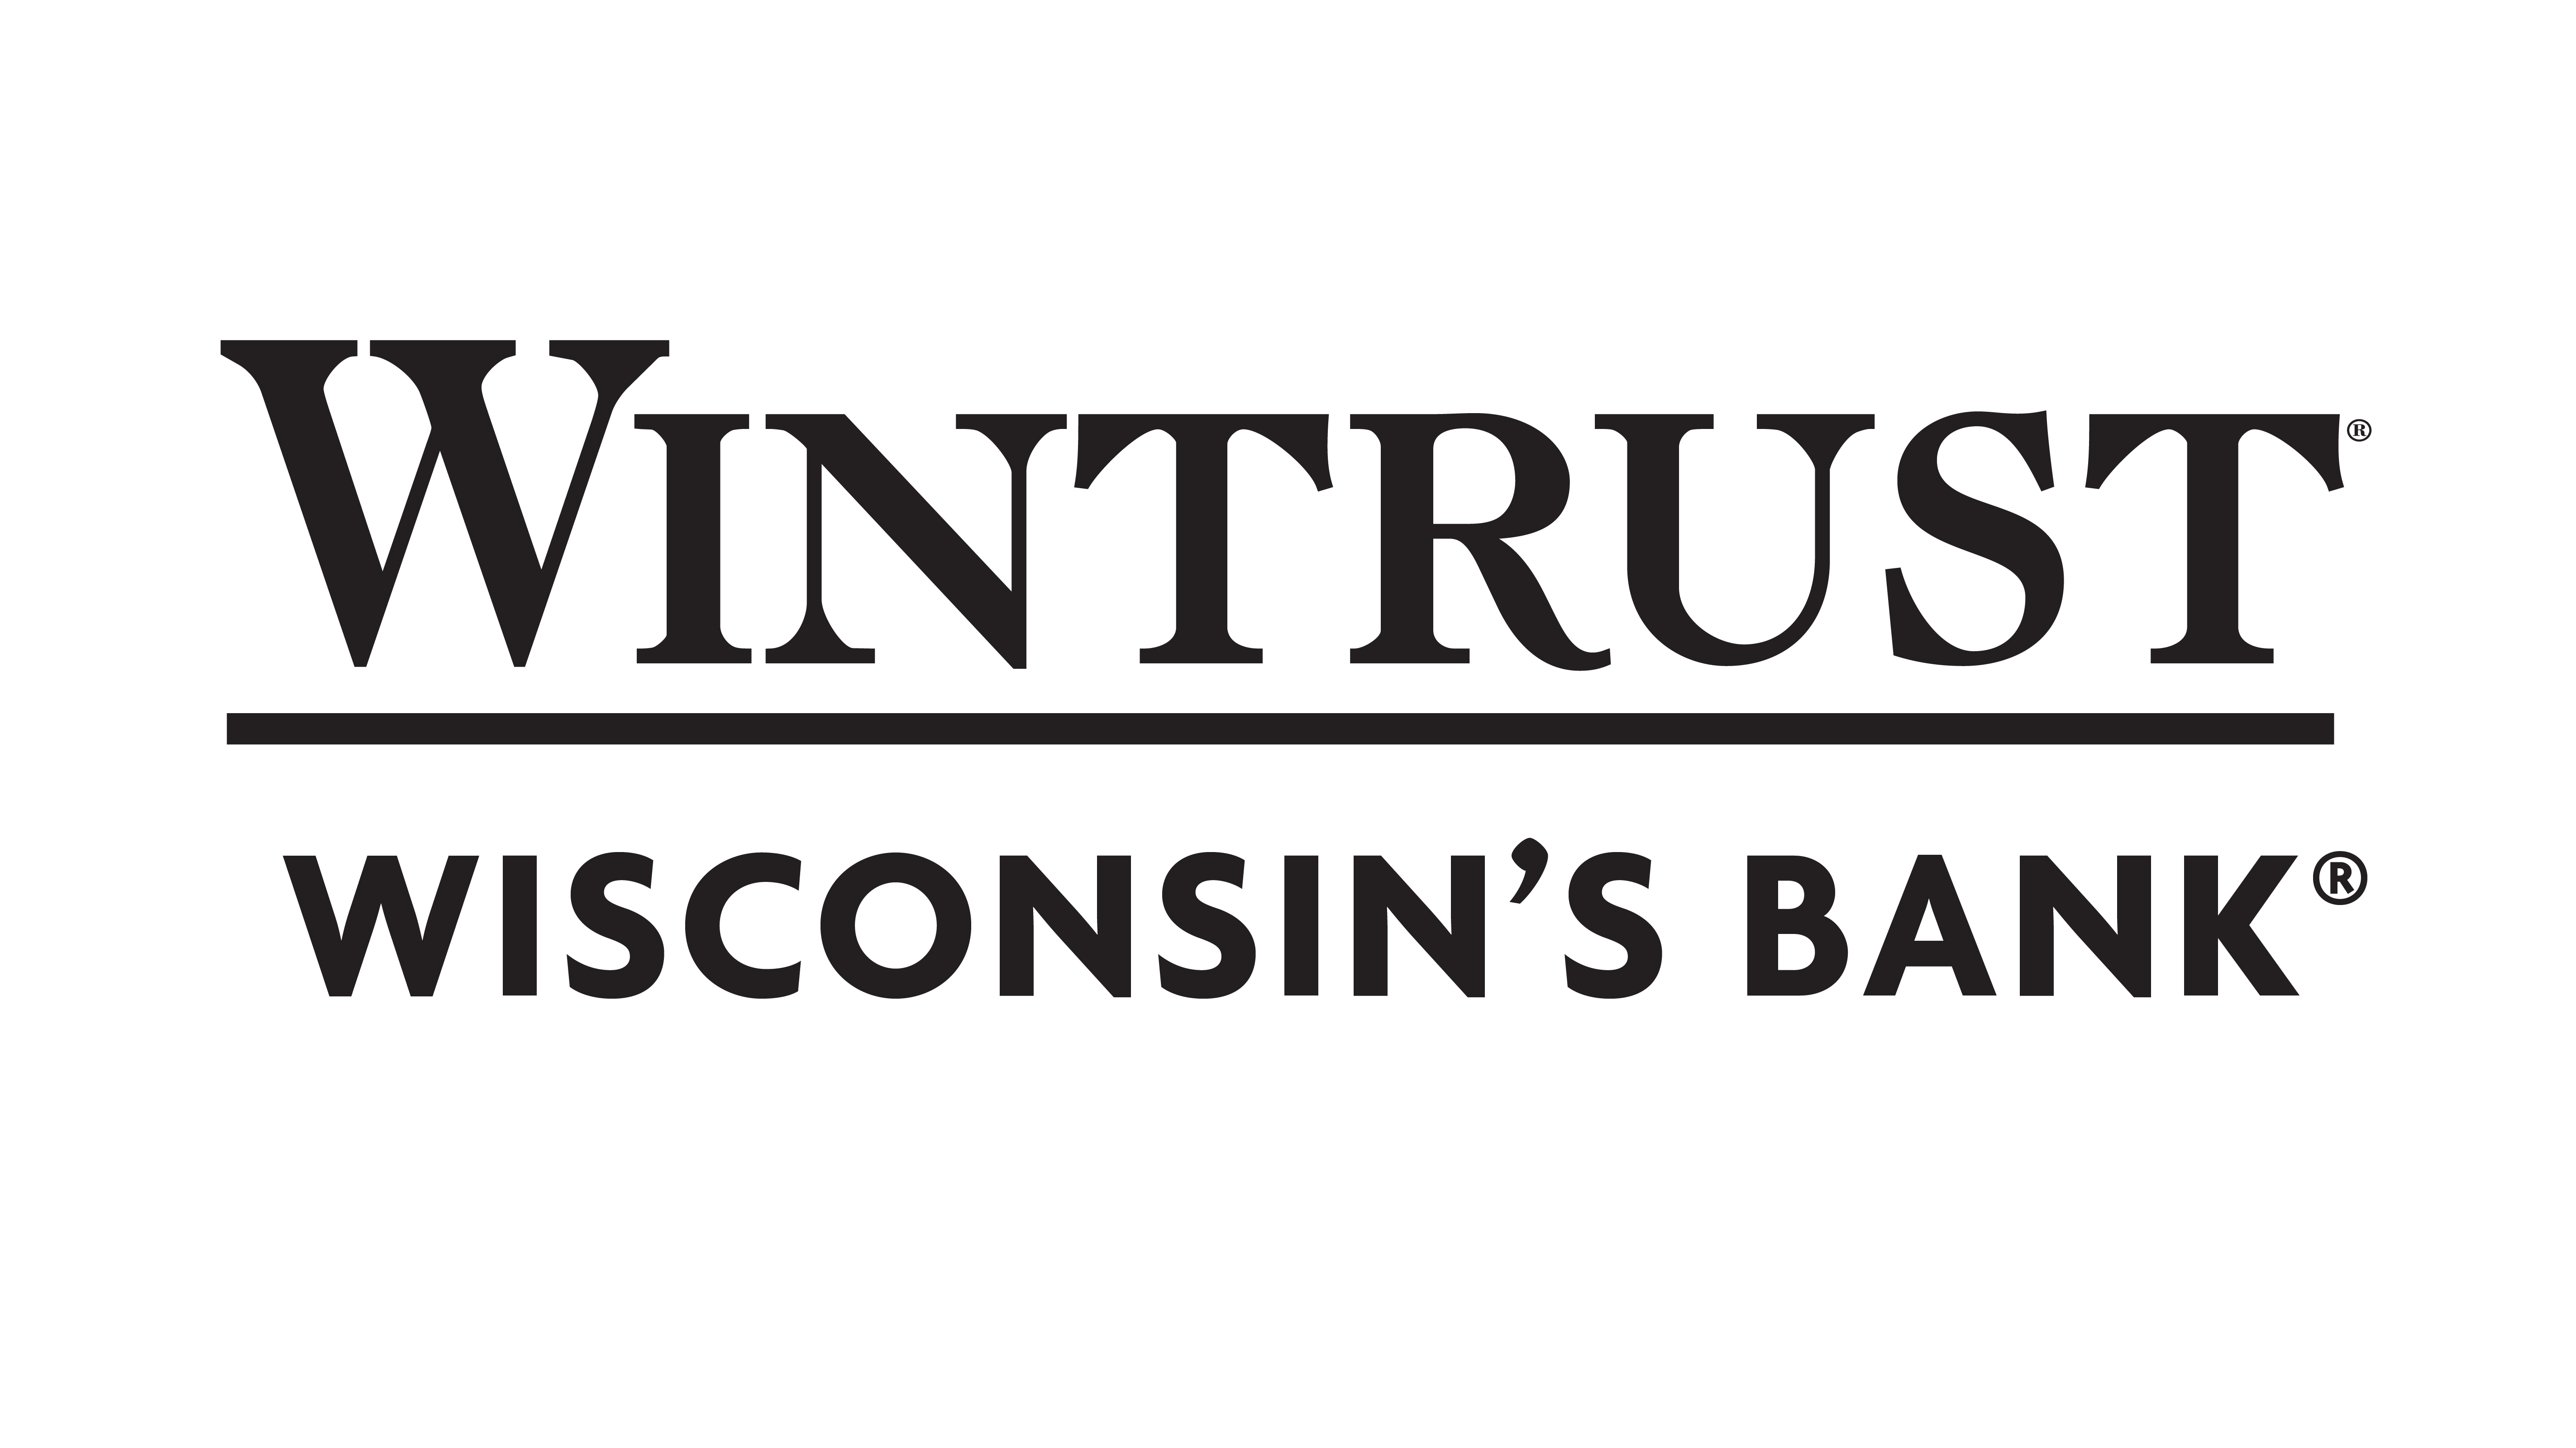 Wintrust Wisconsin's bank